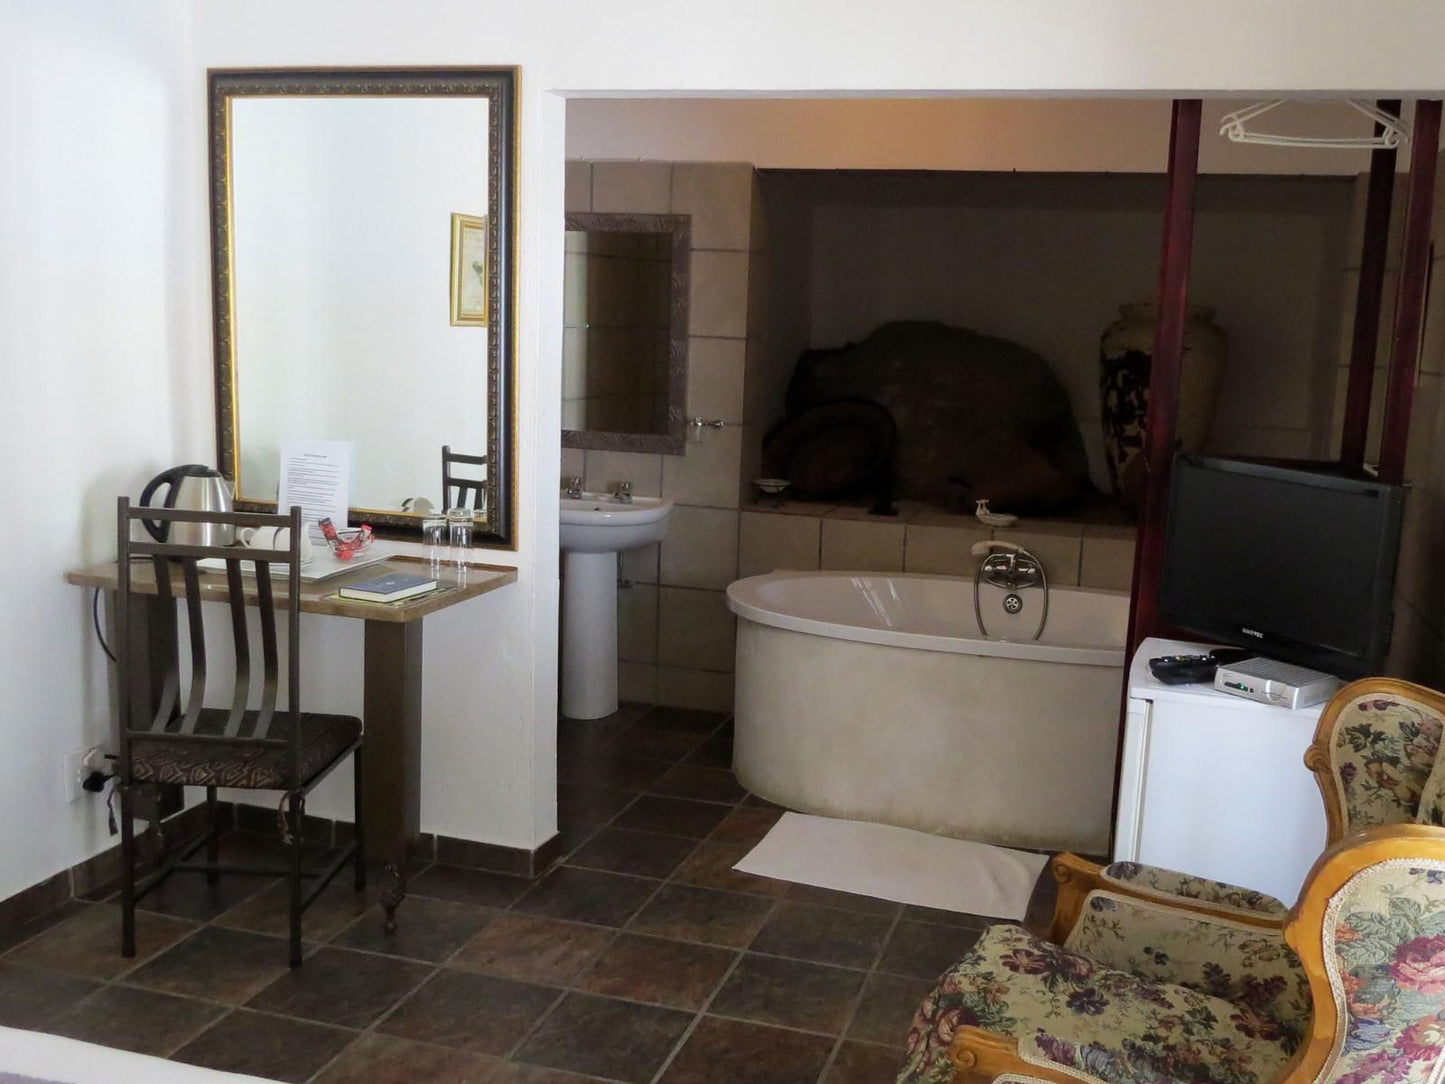 Pensao Guest Lodge Sonheuwel Nelspruit Mpumalanga South Africa Bathroom